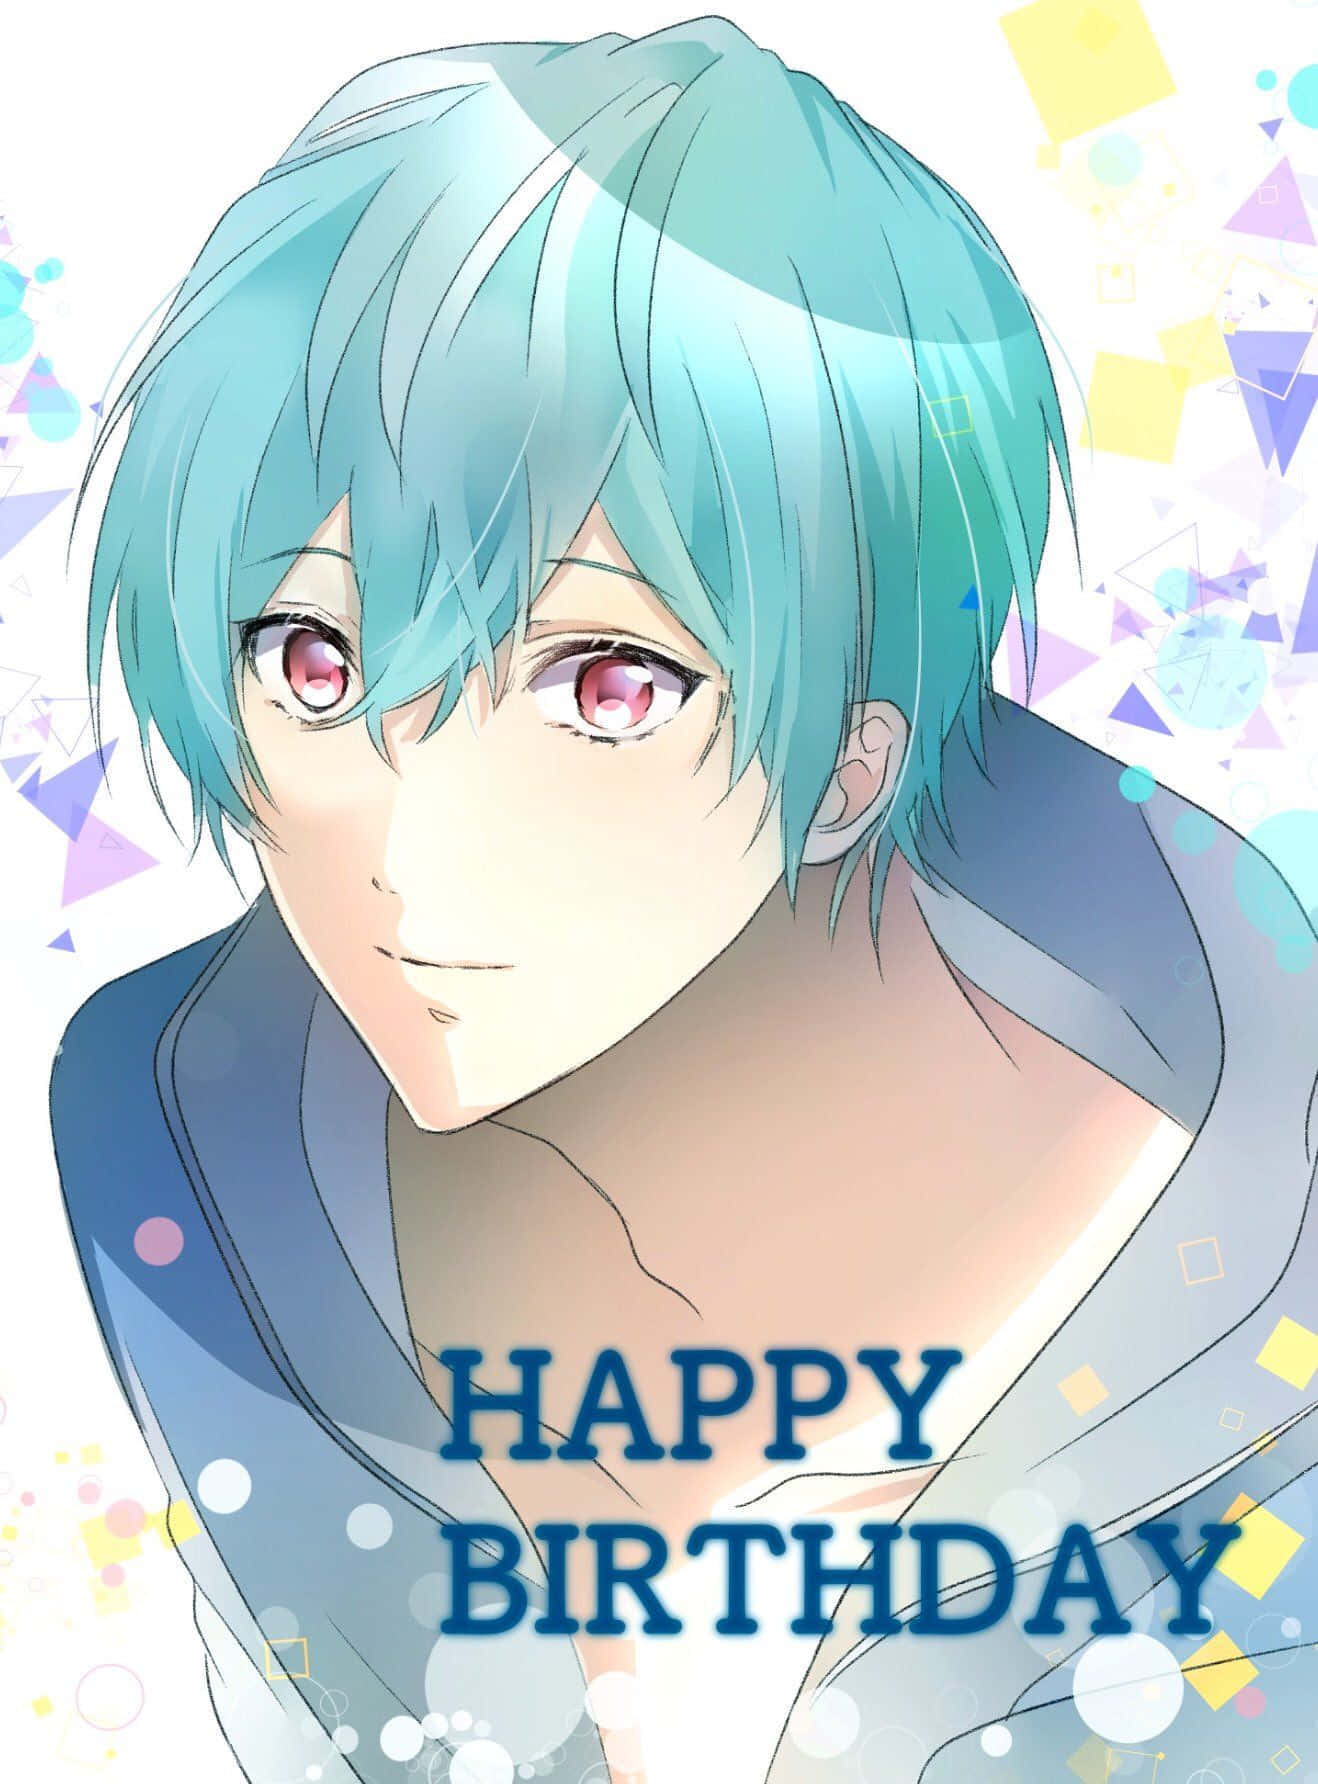 Happy Birthday Anime [wallpaper] Wallpaper